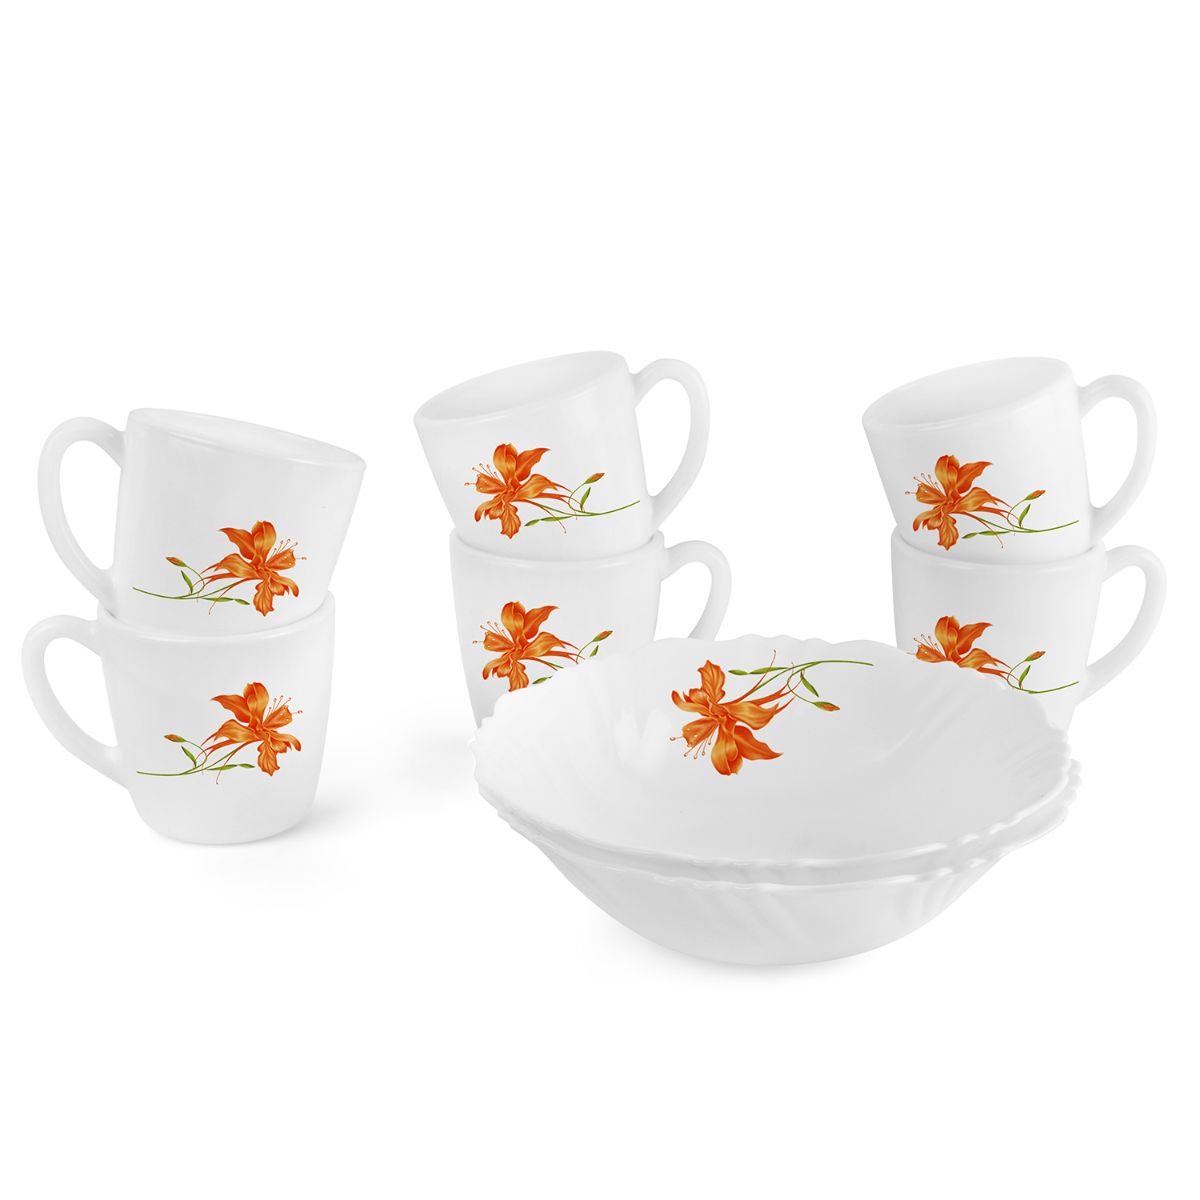 Imperial Series Quick Bite Bowl & Mug Gift set, 8 Pieces Orange Lily / 8 Pieces